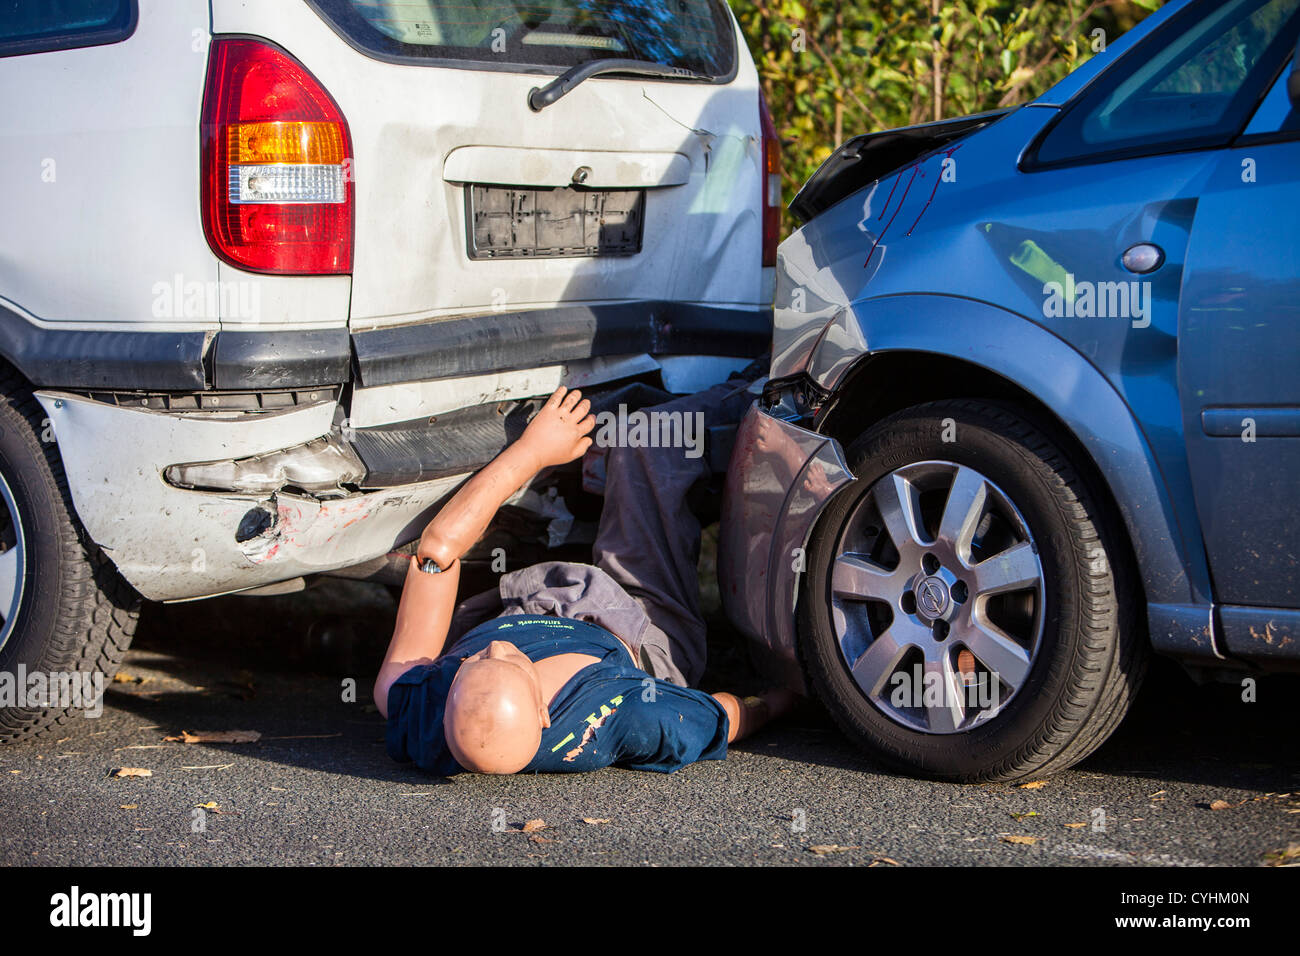 Car crash hi-res stock photography and images - Alamy